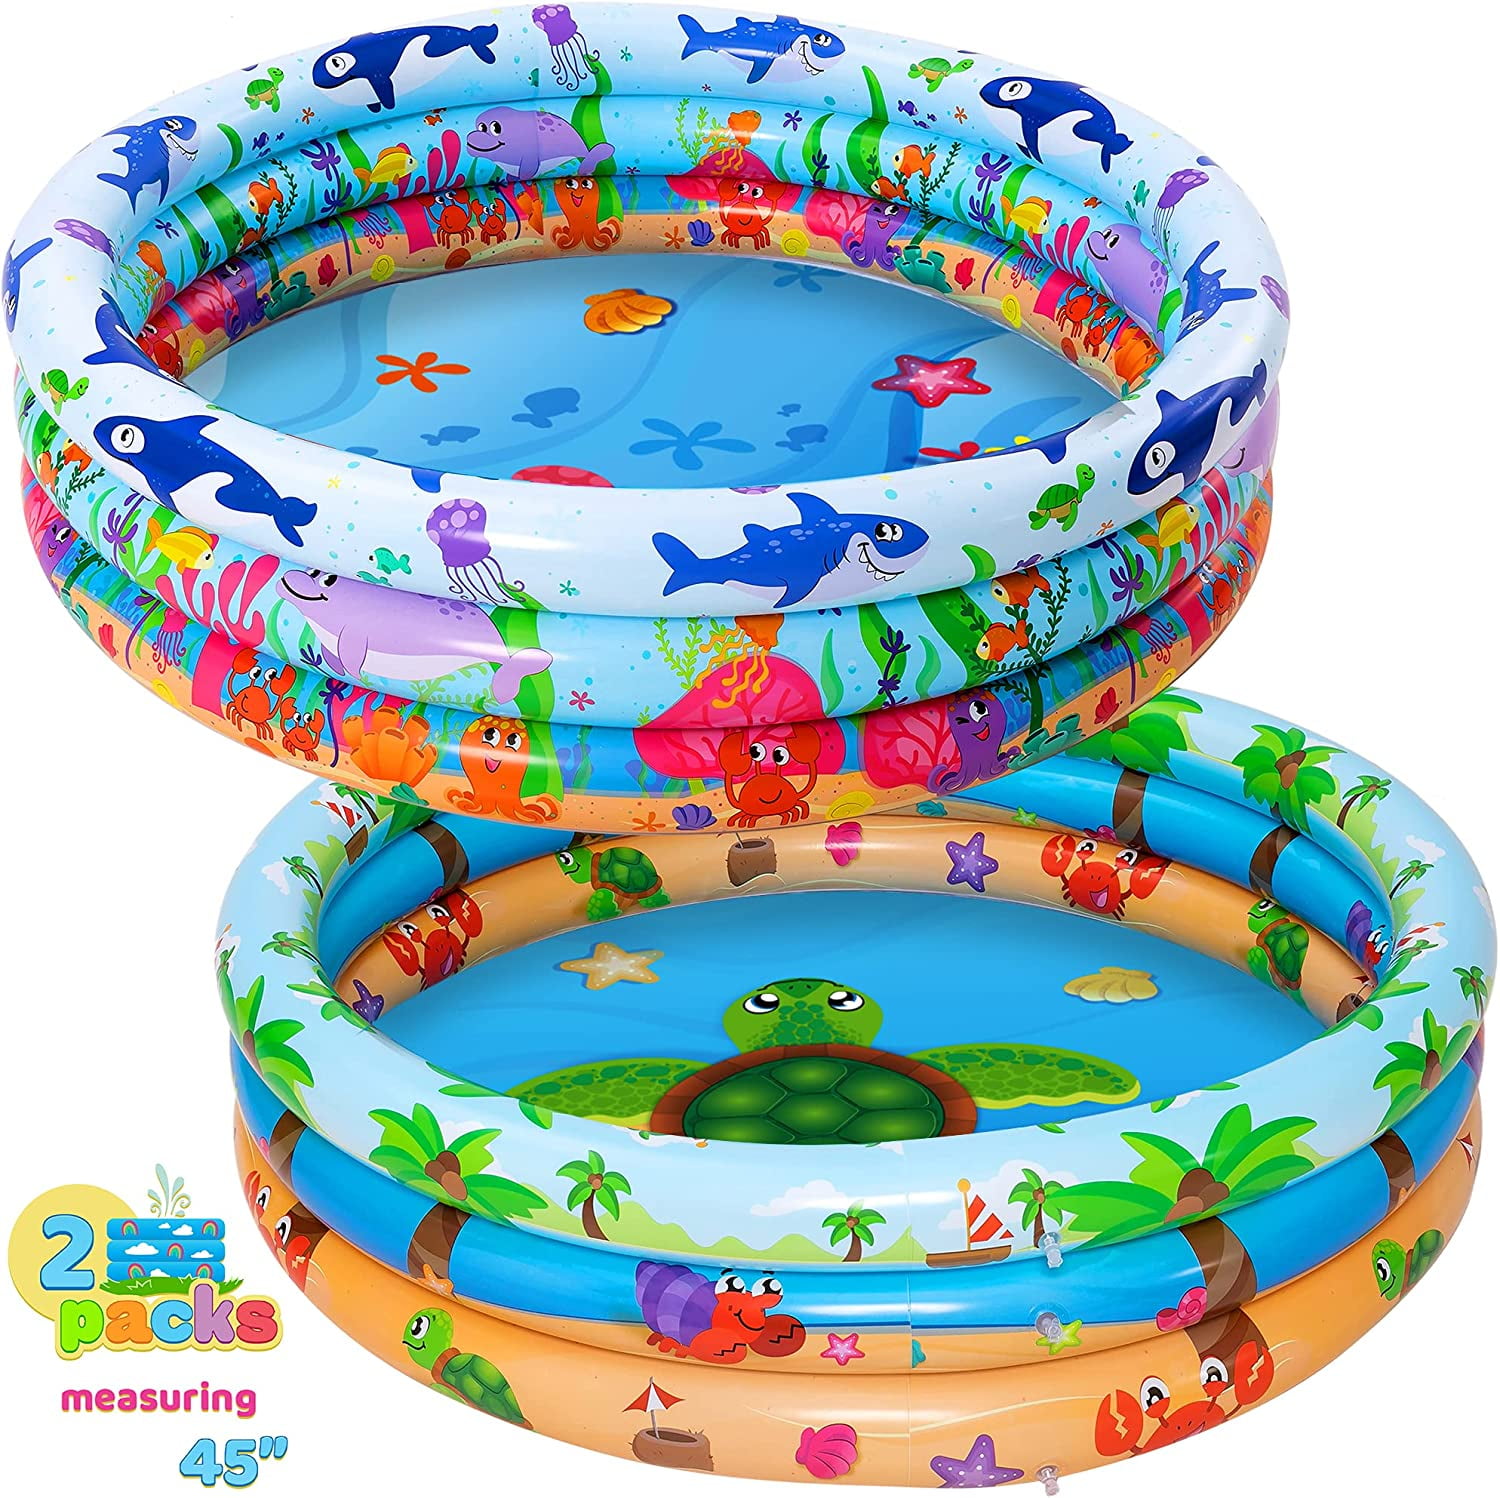 JOYIN Ocean Pattern Inflatable Kiddie Swimming Pool Giant-Size Swim Center for Summer Fun Outdoor Kids/Family Activity 